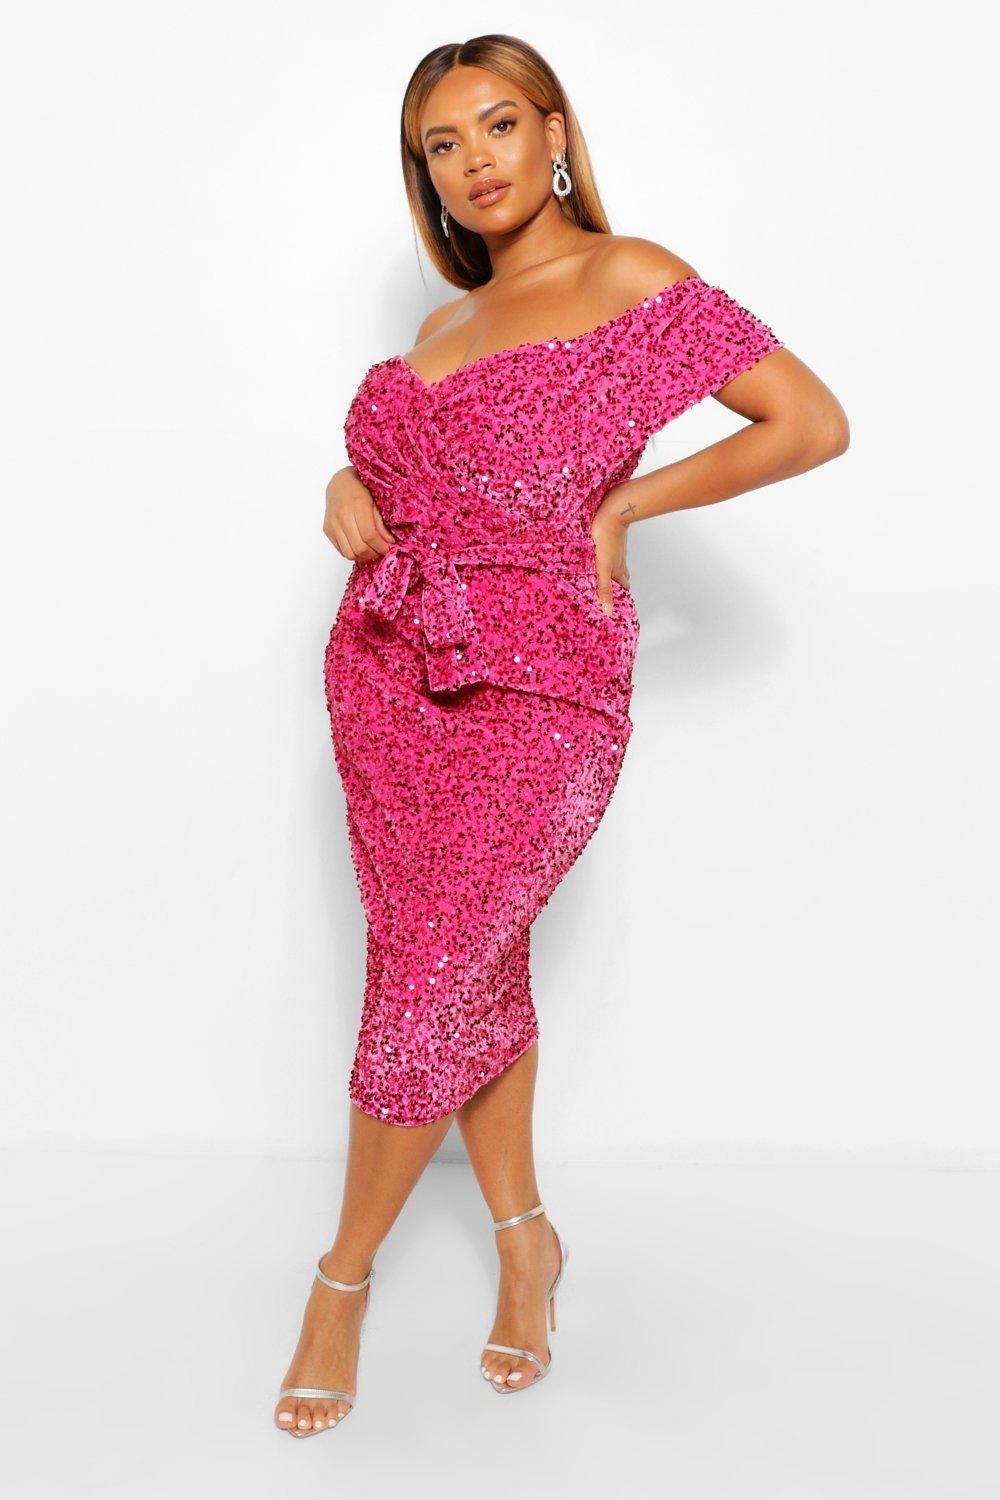 Model wearing sequin pink dress